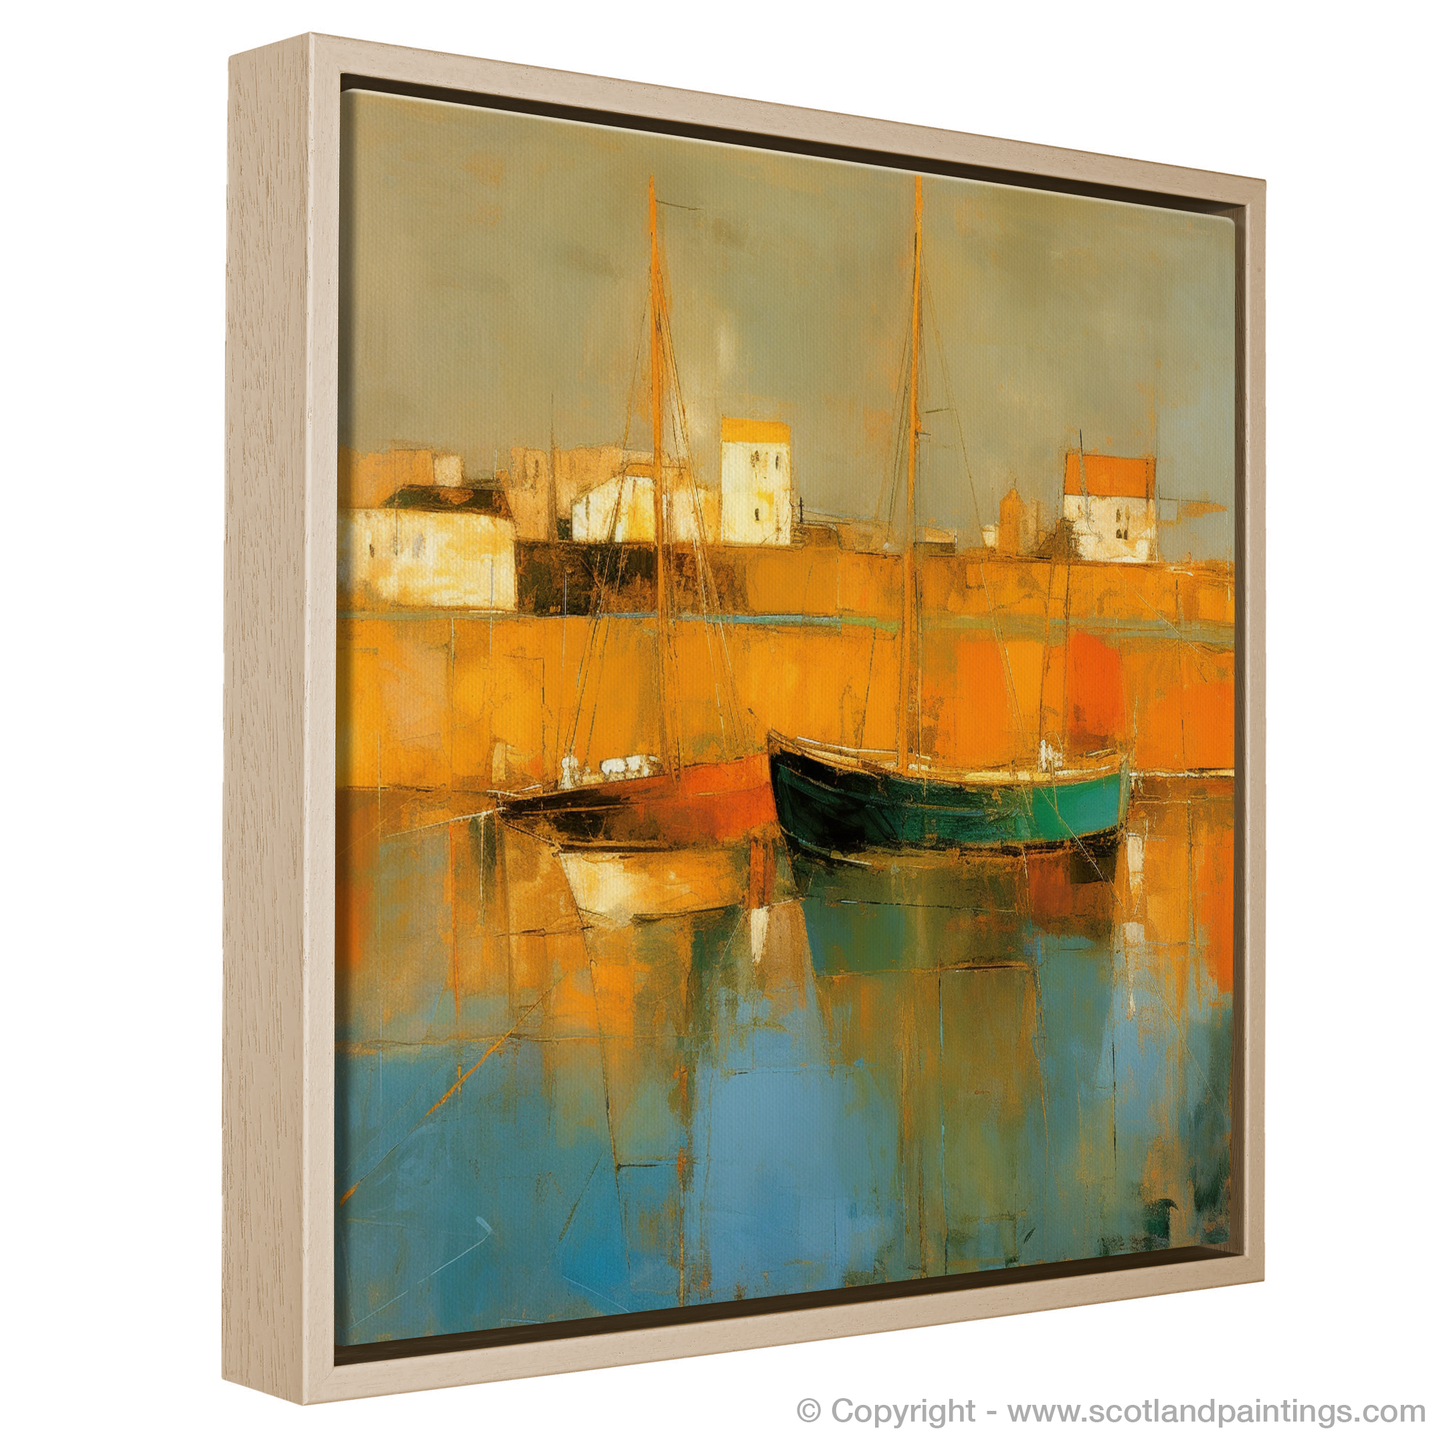 Golden Hour at Port Ellen Harbour: An Abstract Impressionist Homage to Scottish Coastal Charm